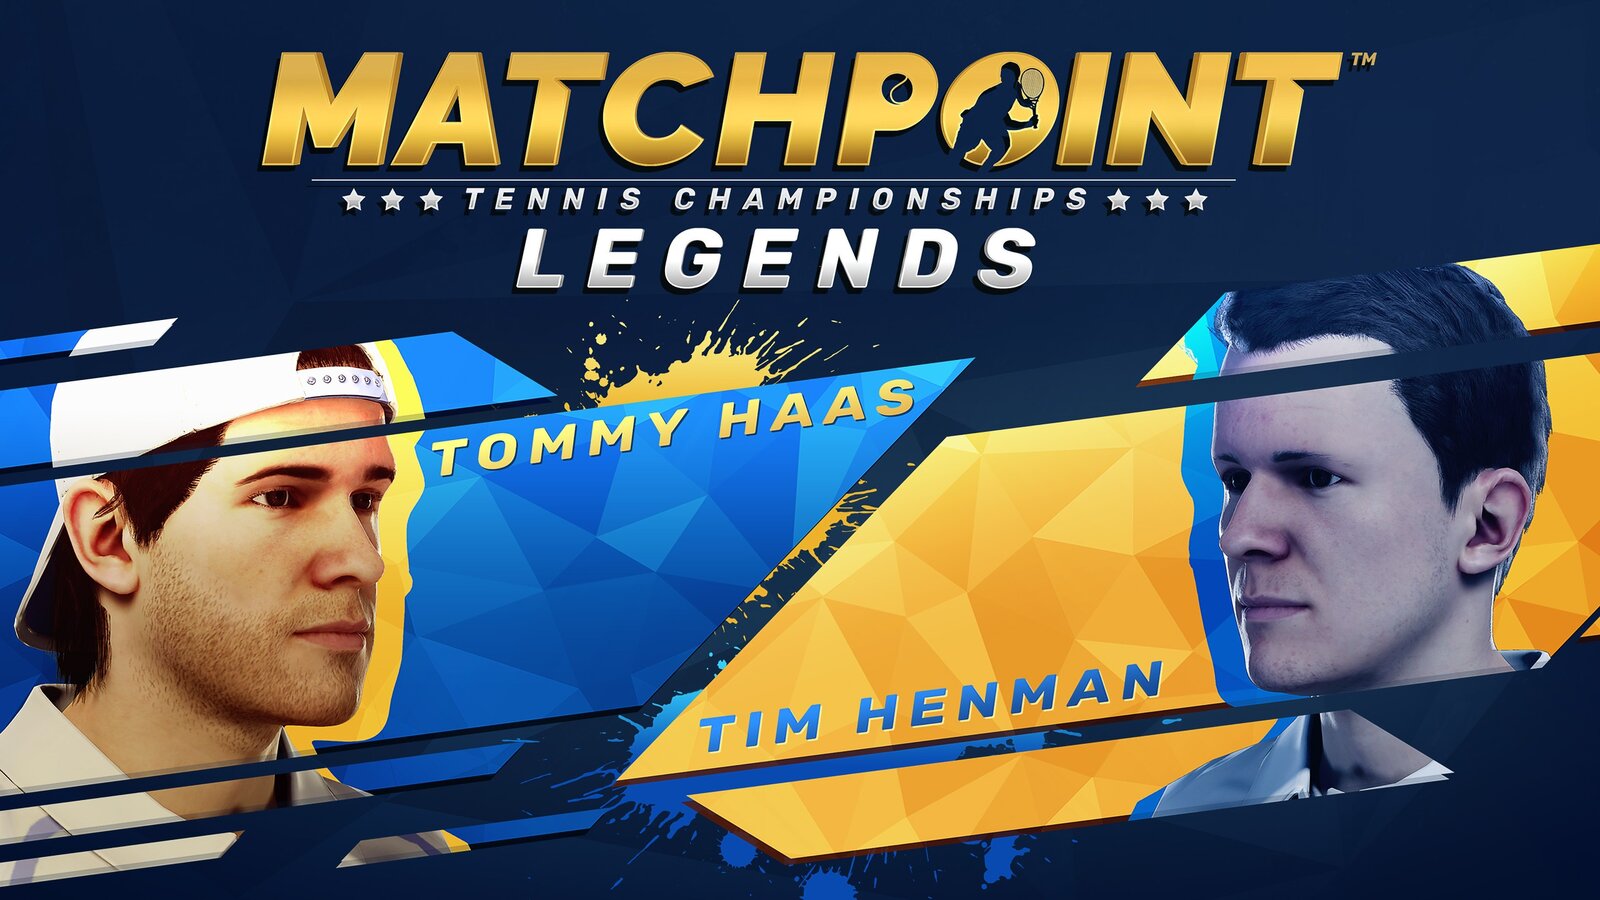 Matchpoint: Tennis Championships - Legends